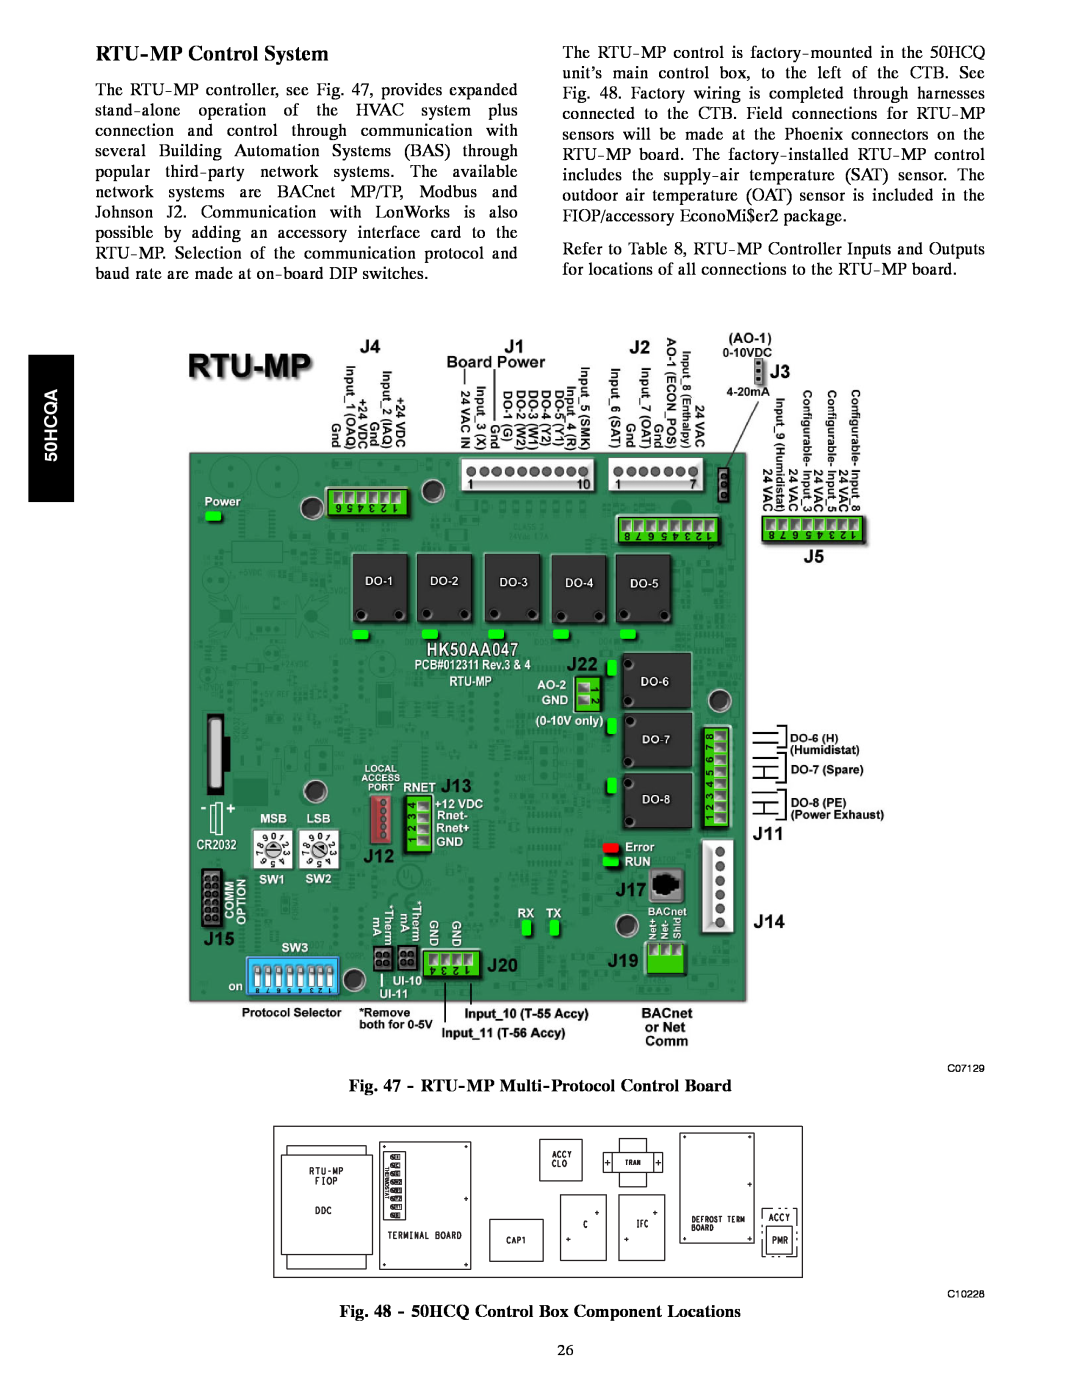 Carrier 50HCQA RTU-MPControl System, RTU-MP Multi-ProtocolControl Board, 50HCQ Control Box Component Locations 